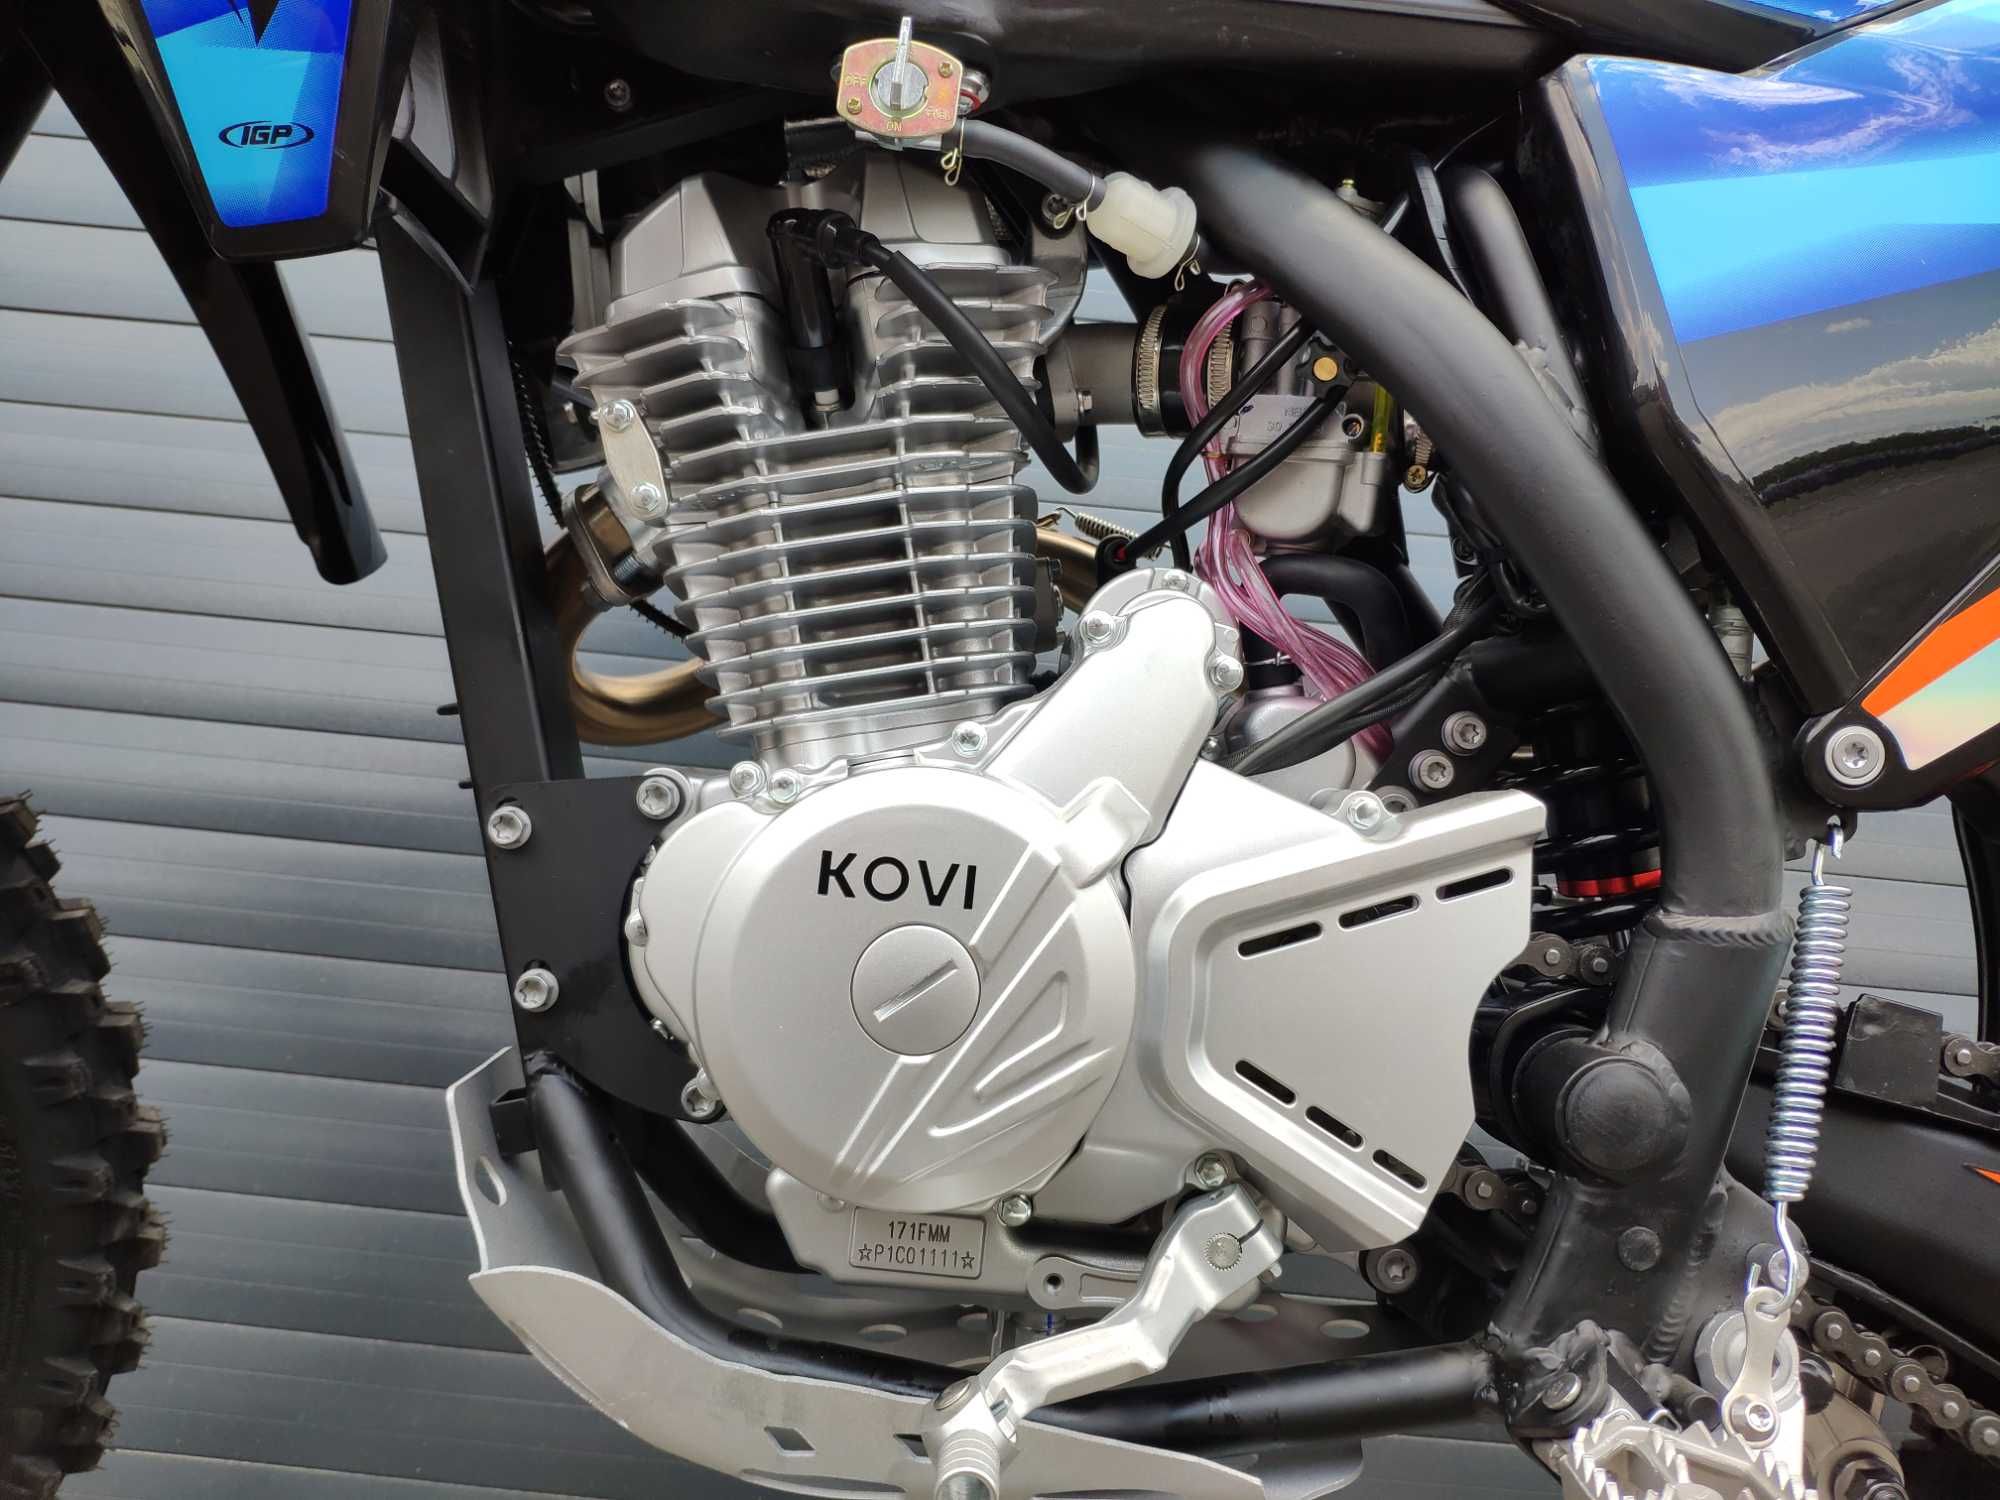 Мотоцикл Kovi Advance 250 (24,5 л.с.) мотосалон MotoPlus